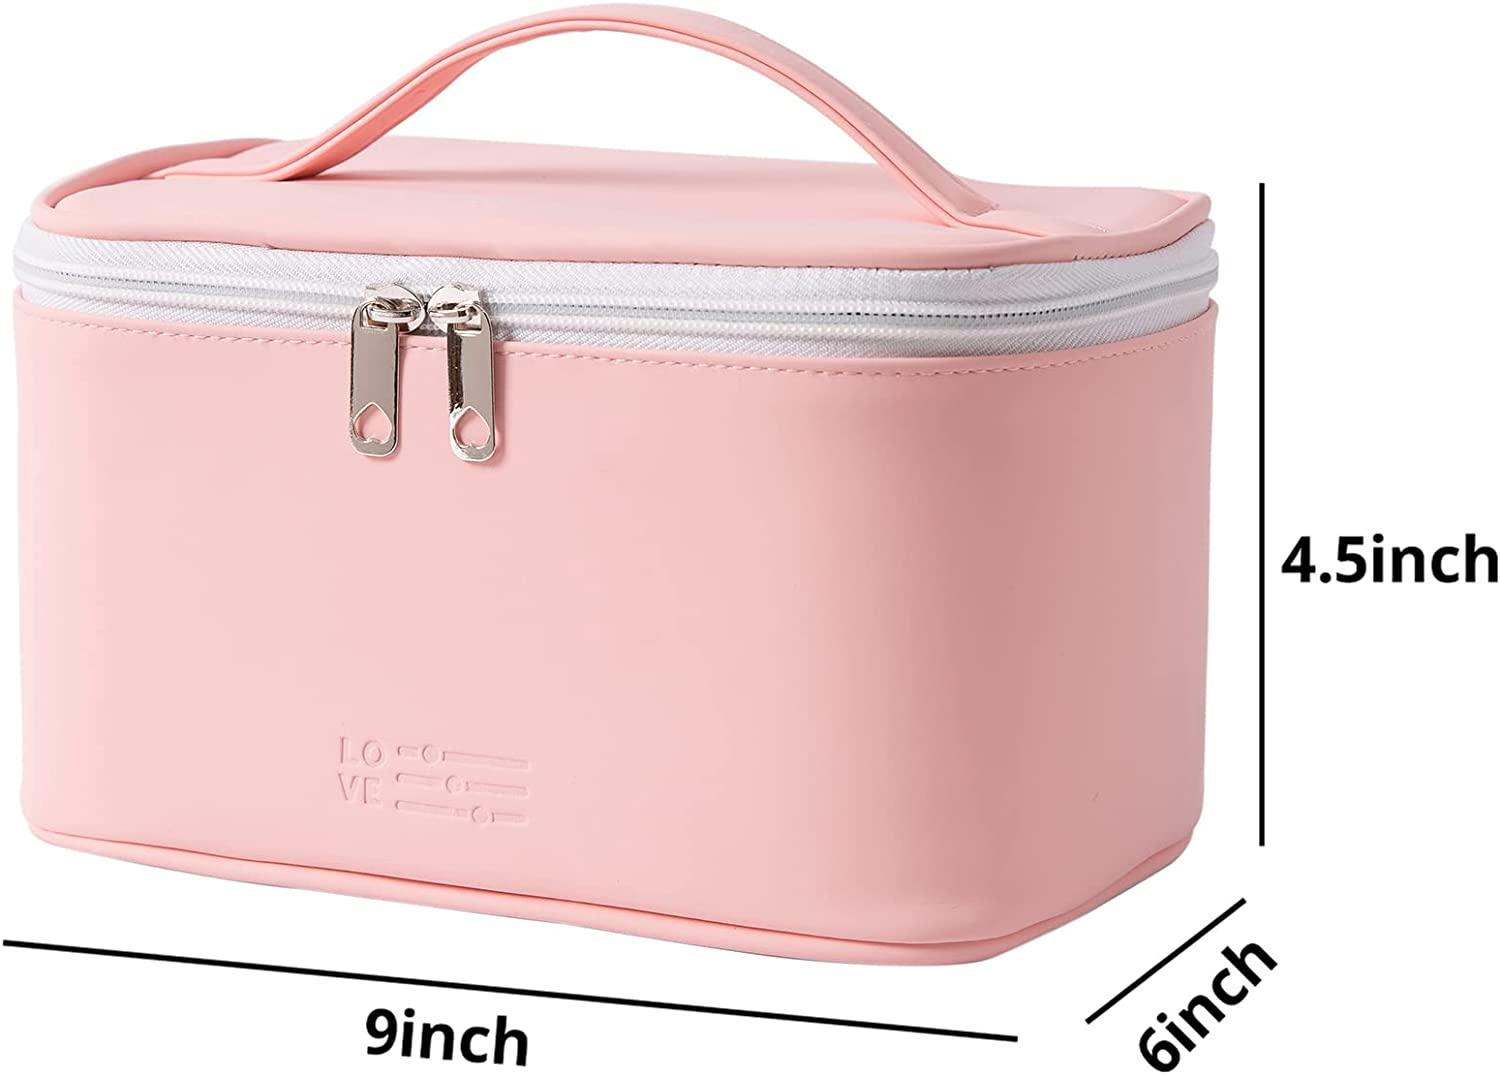 Unique Bargains Double Layer Makeup Bag Cosmetic Travel Bag Case Organizer  Bag Clear Bags for Women 1 Pcs Pink